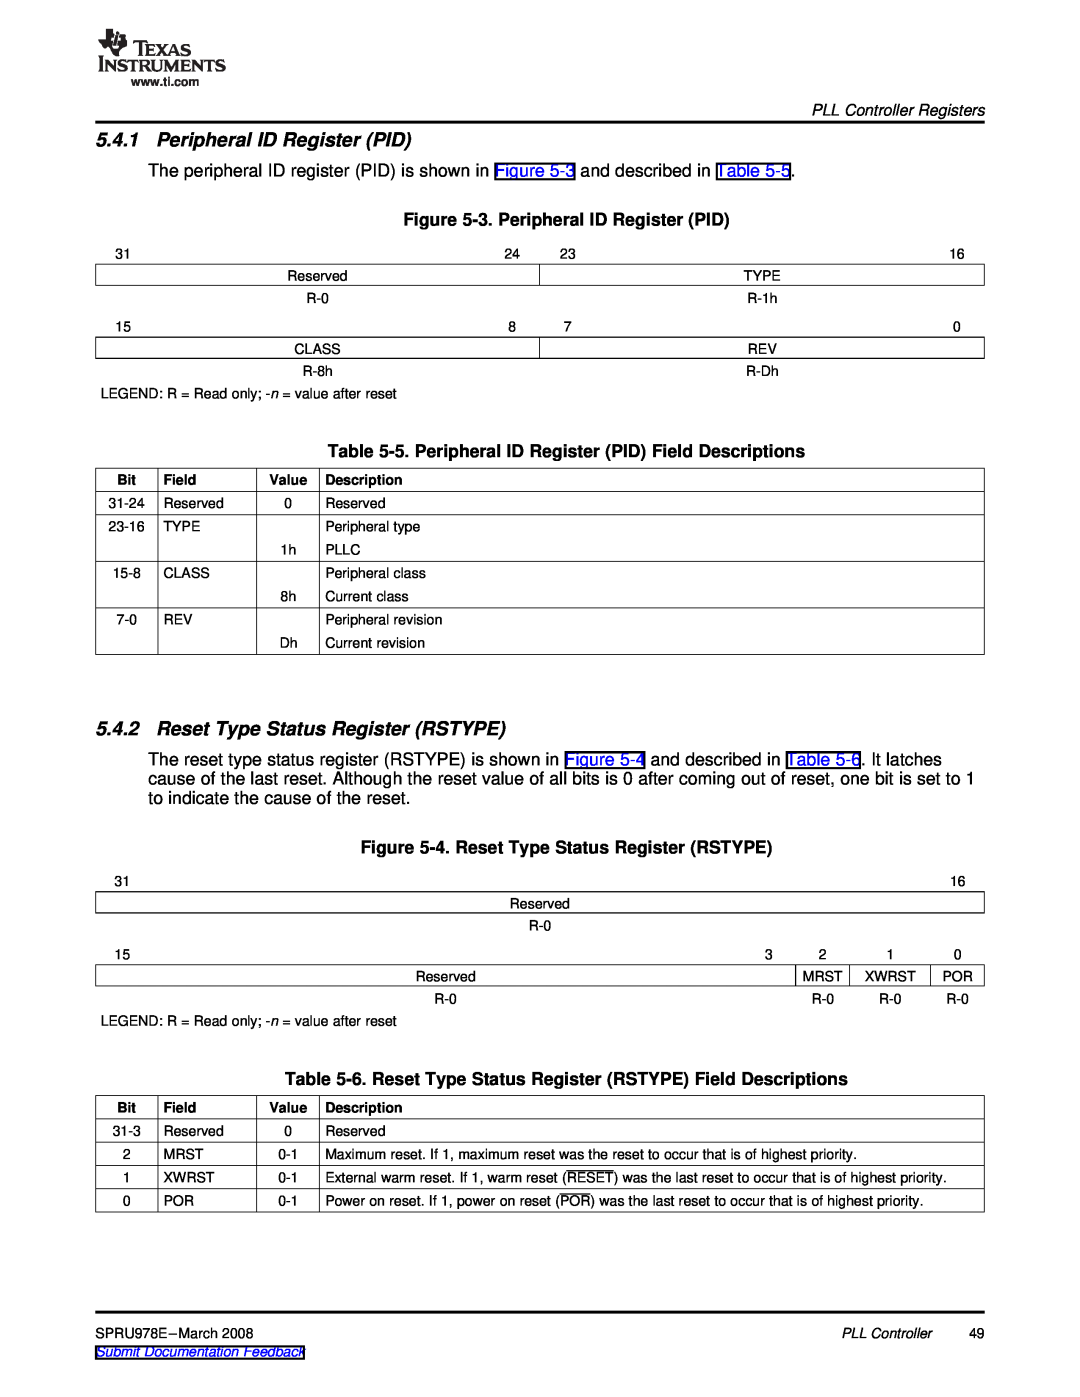 Texas Instruments TMS320DM643x manual Peripheral ID Register PID, Reset Type Status Register RSTYPE 